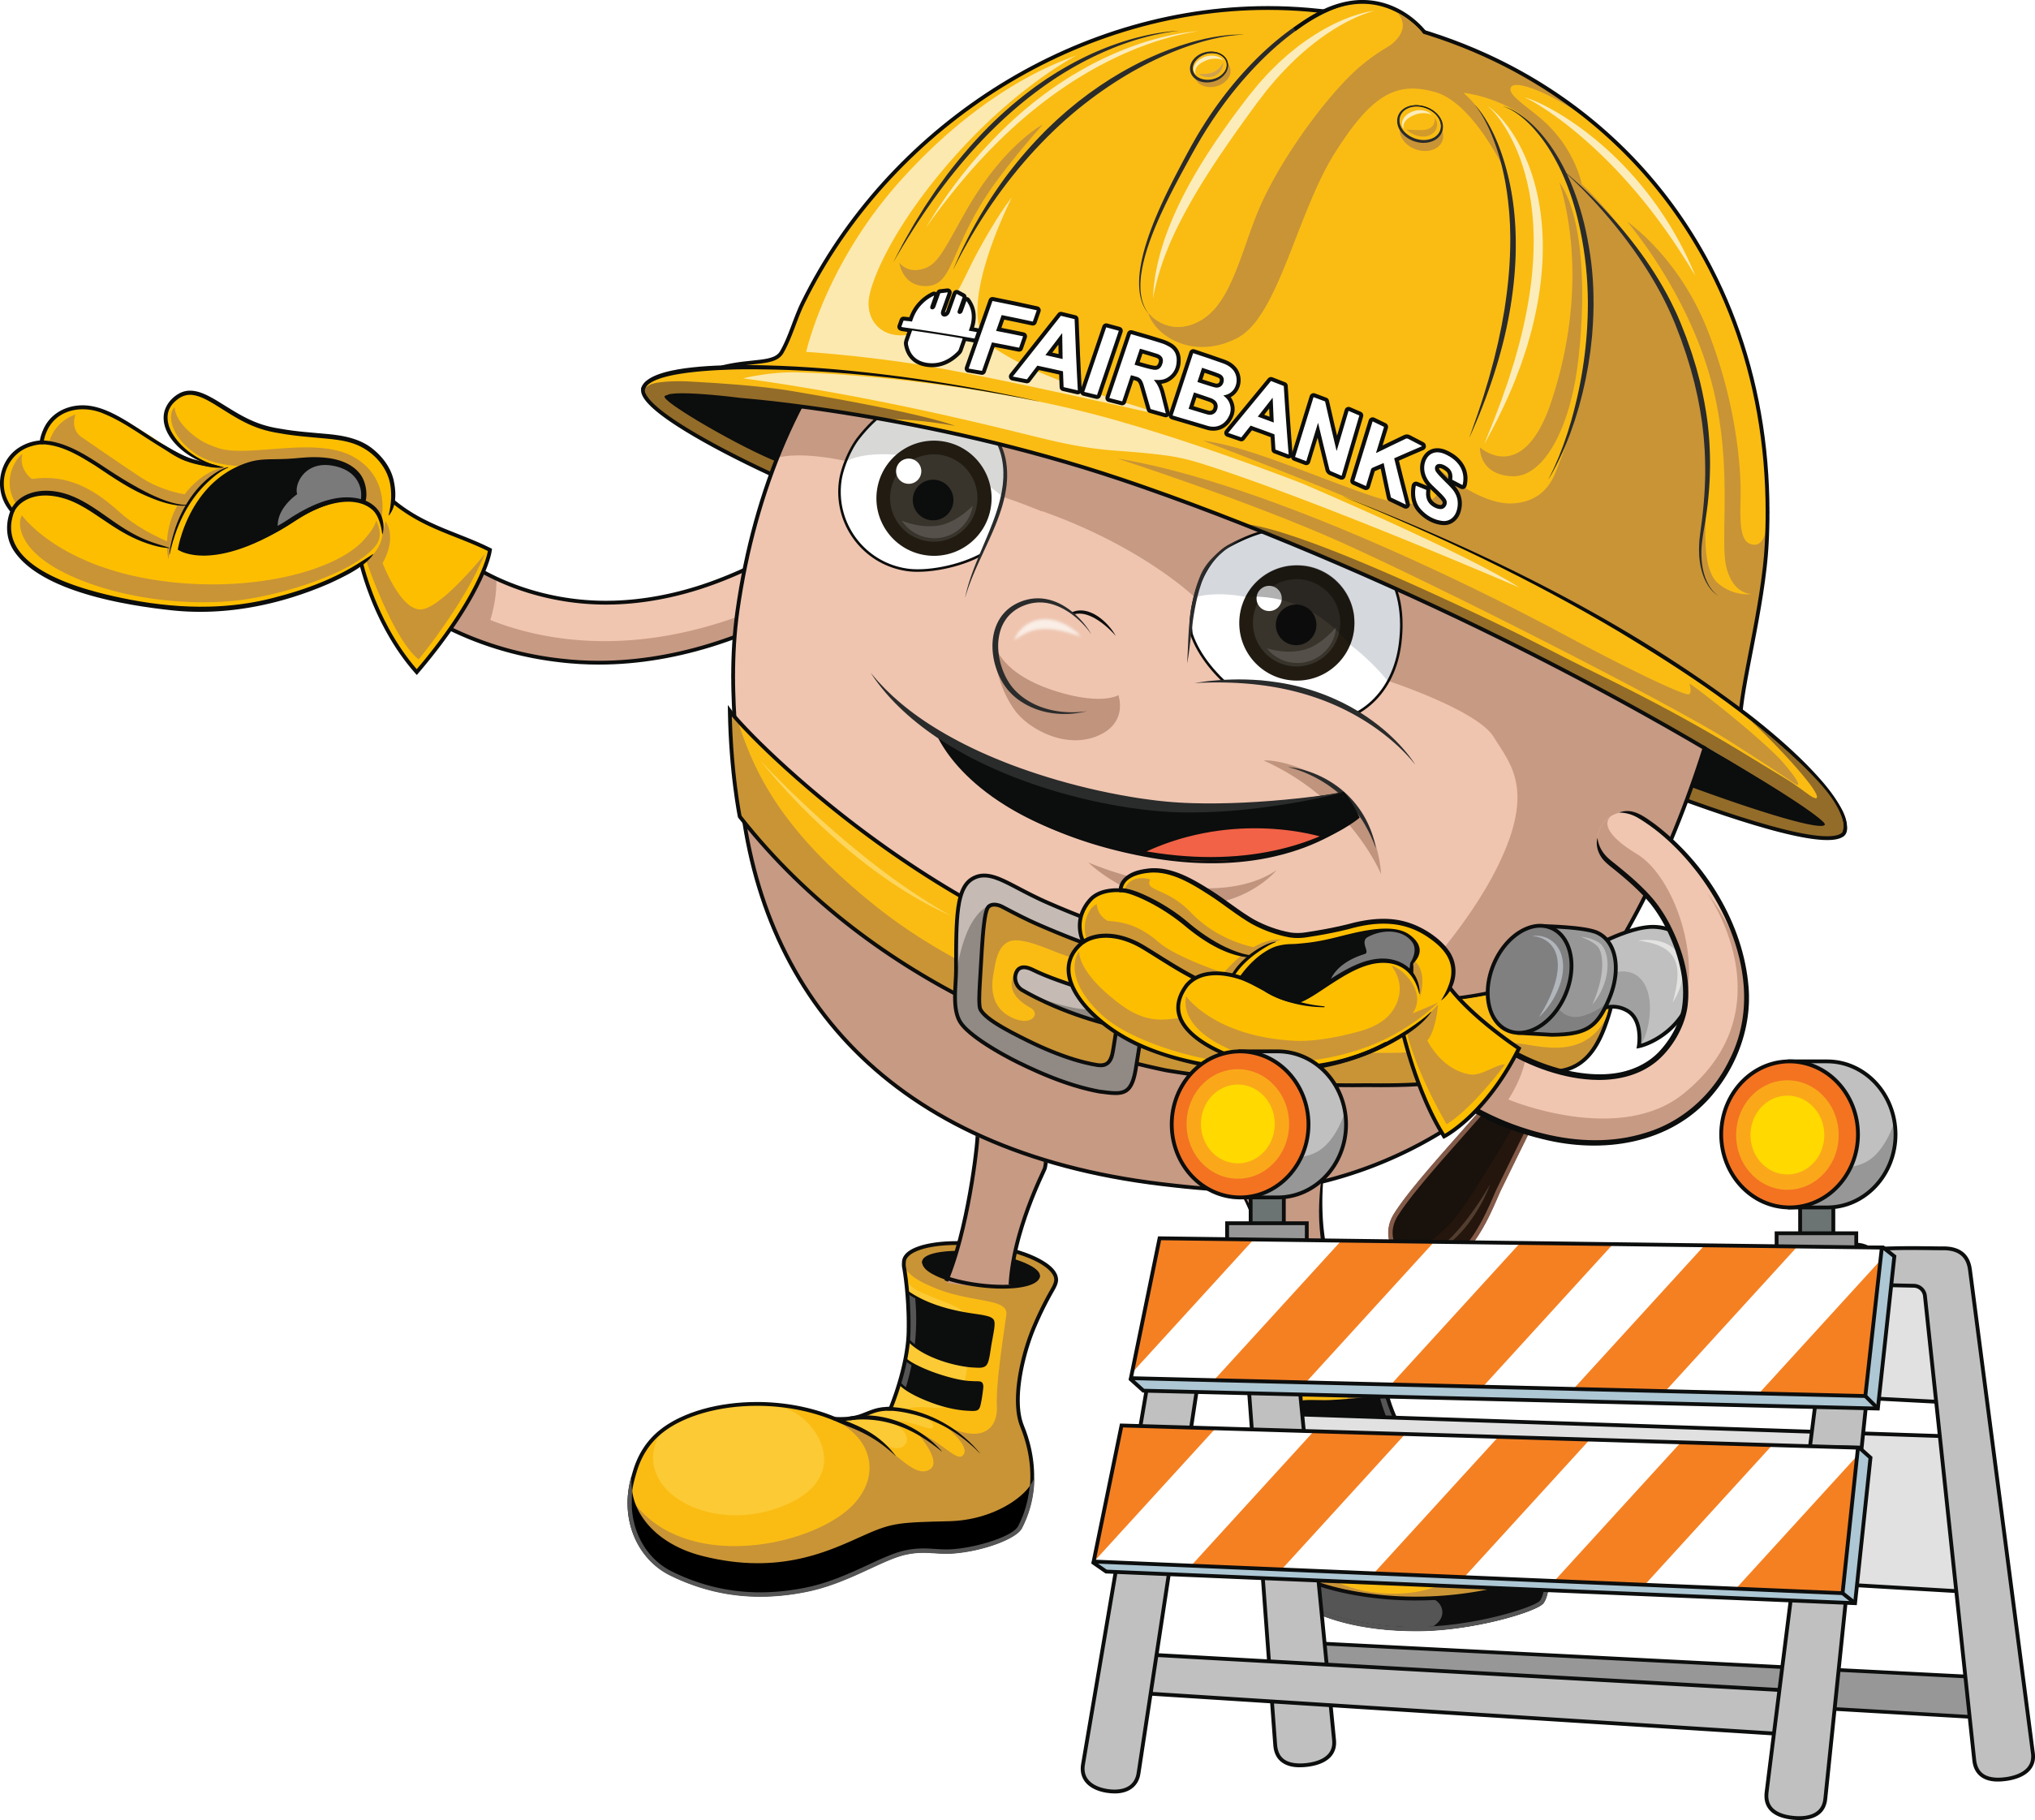 Cheap Iowa Contractor Insurance Mascot